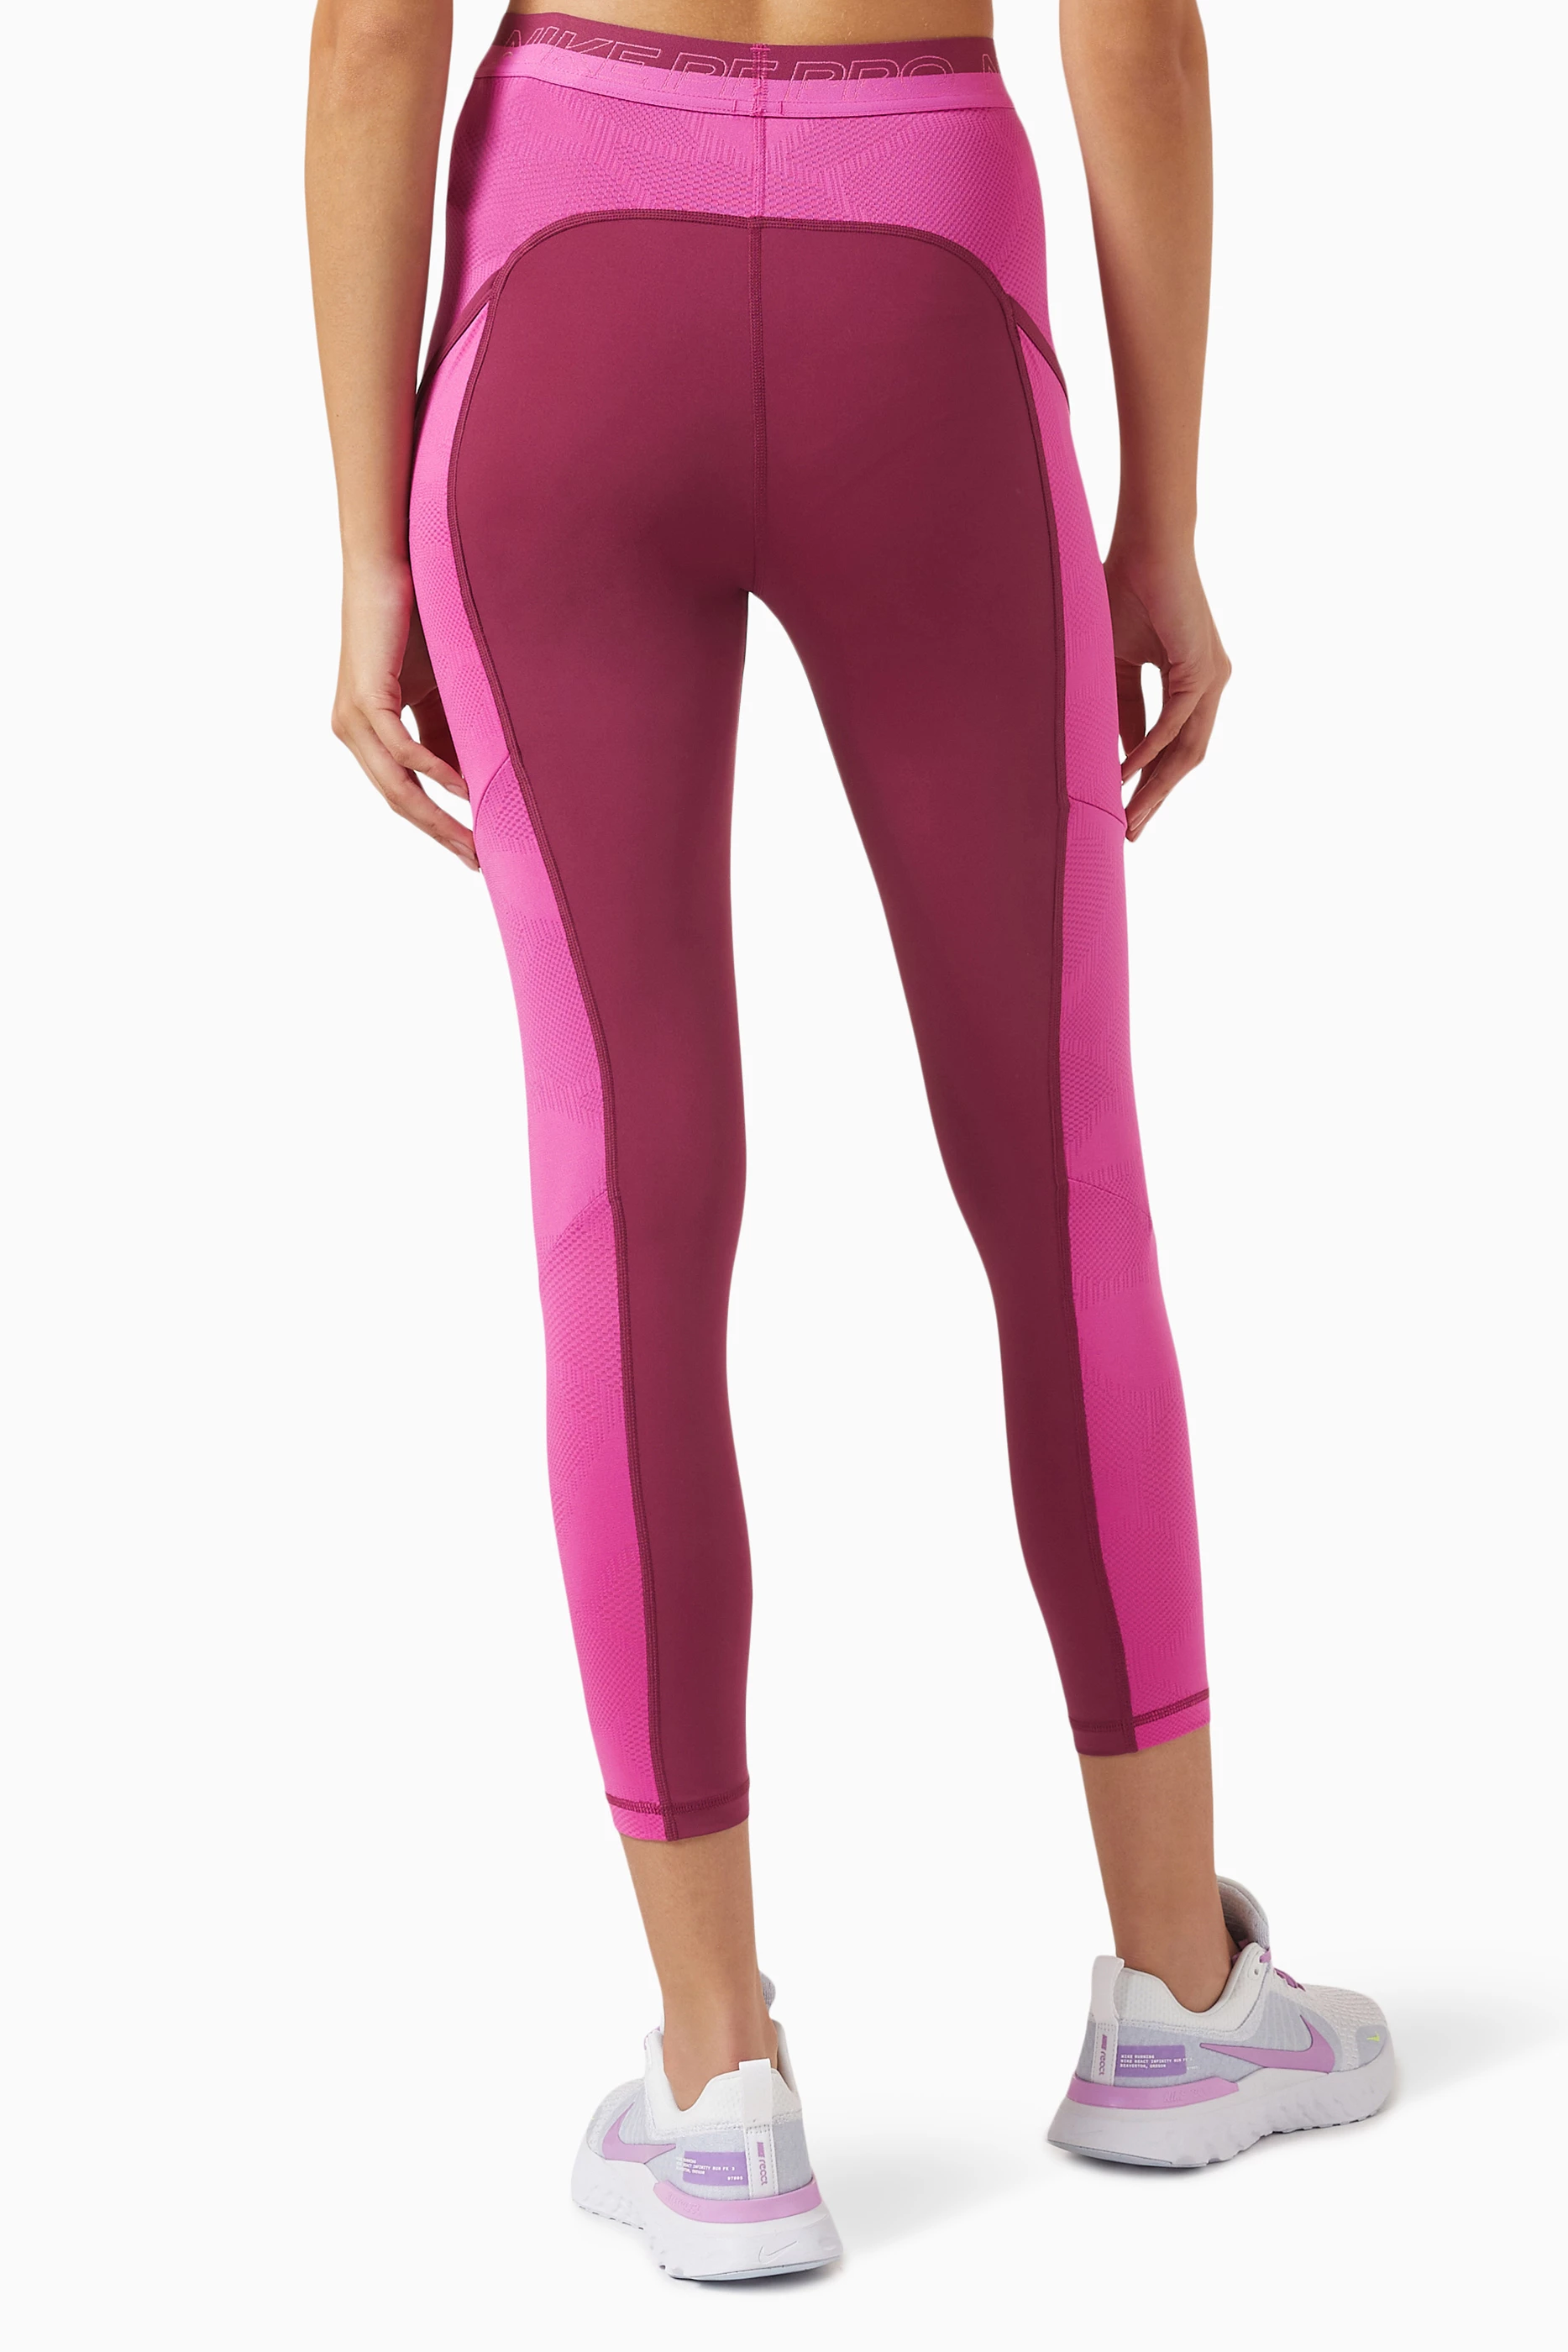 Nike Womens Pink Floral Polyester Capri Leggings Size XL L28 in